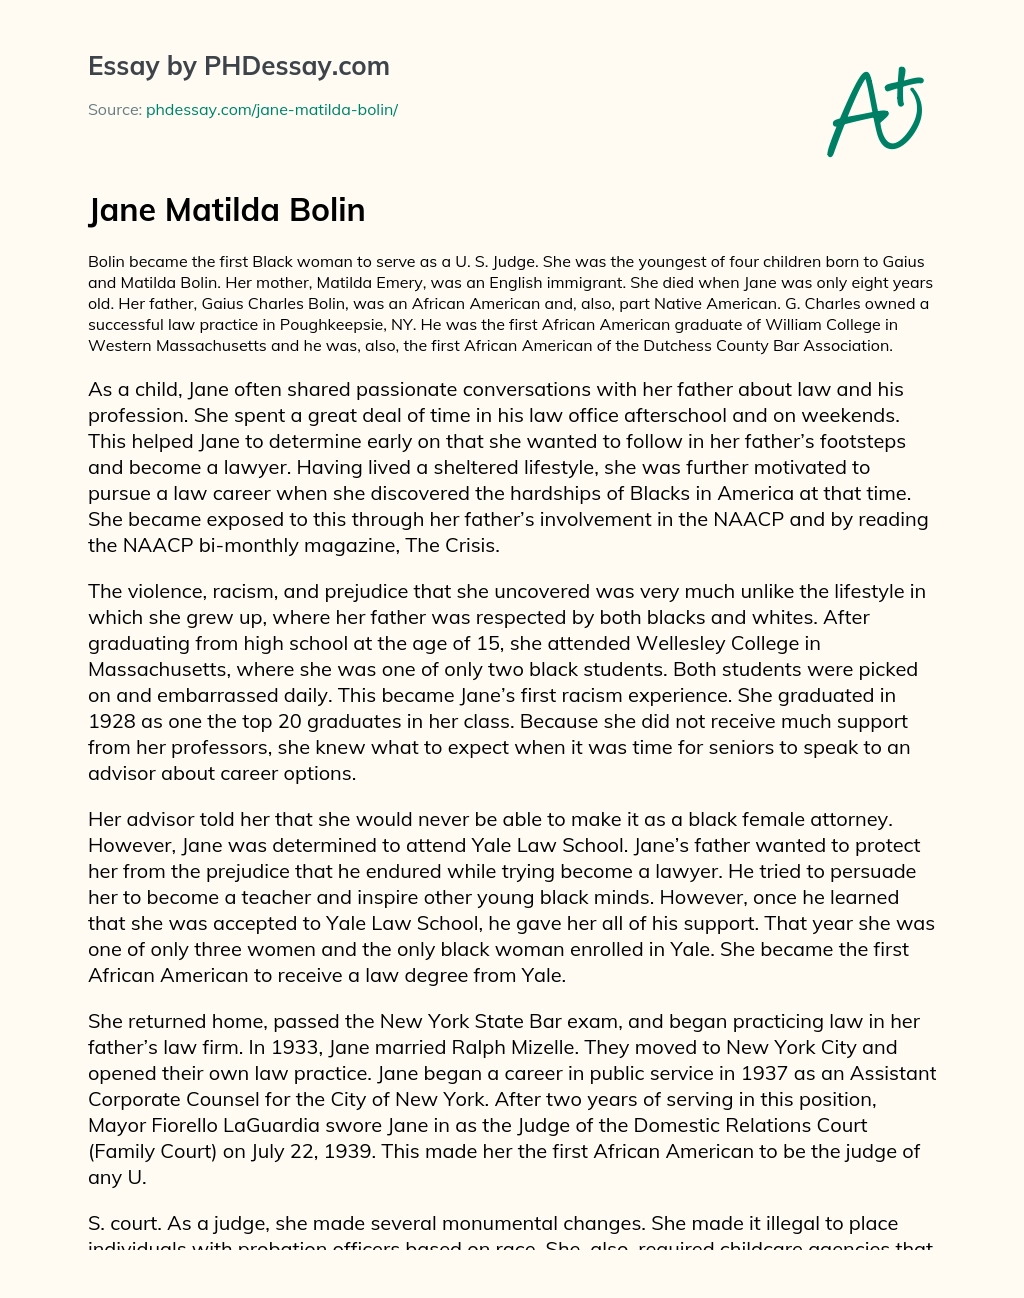 Jane Matilda Bolin essay